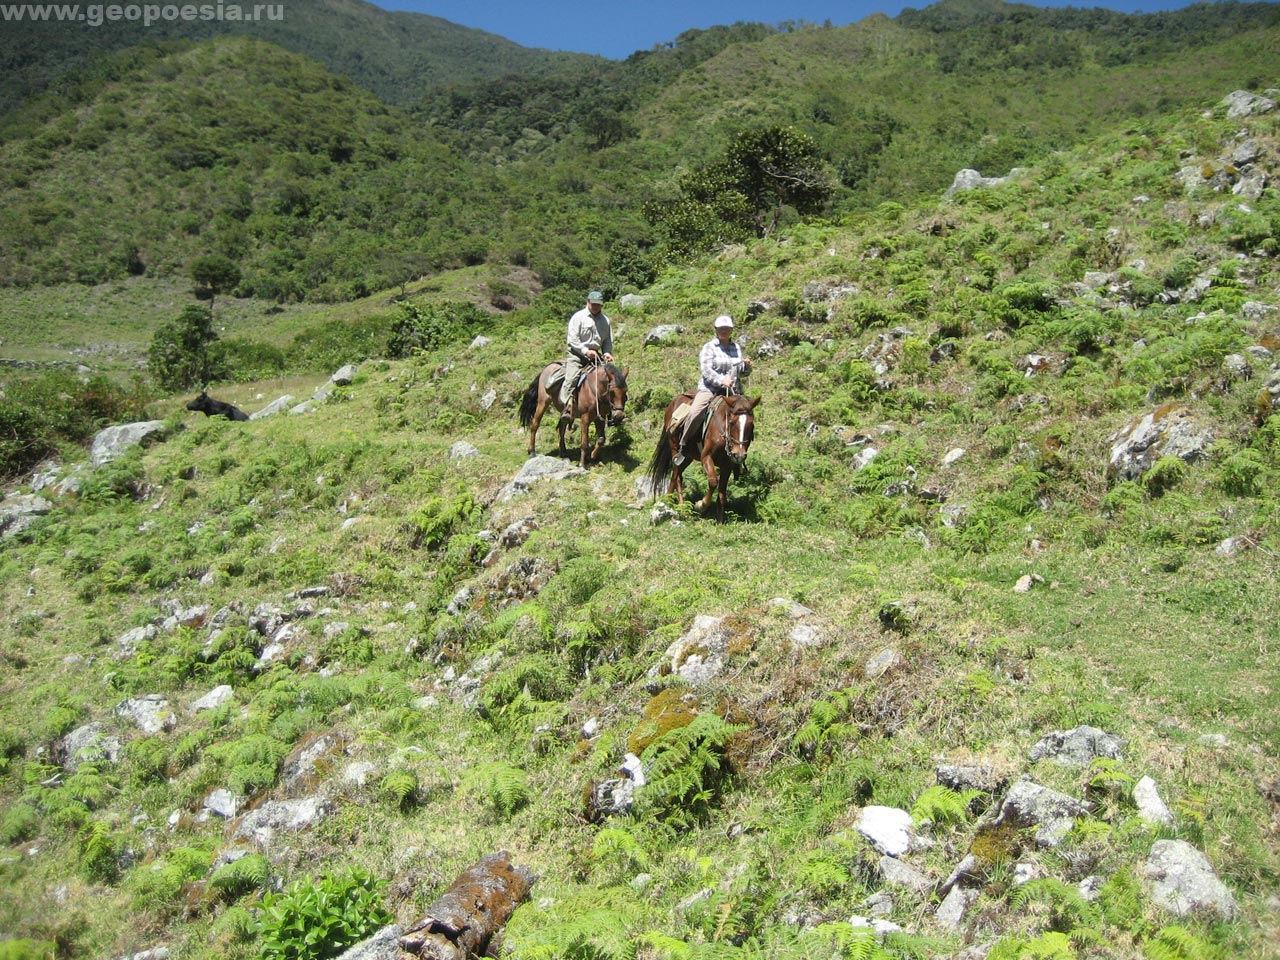 Фото перехода через Анды на лошадях